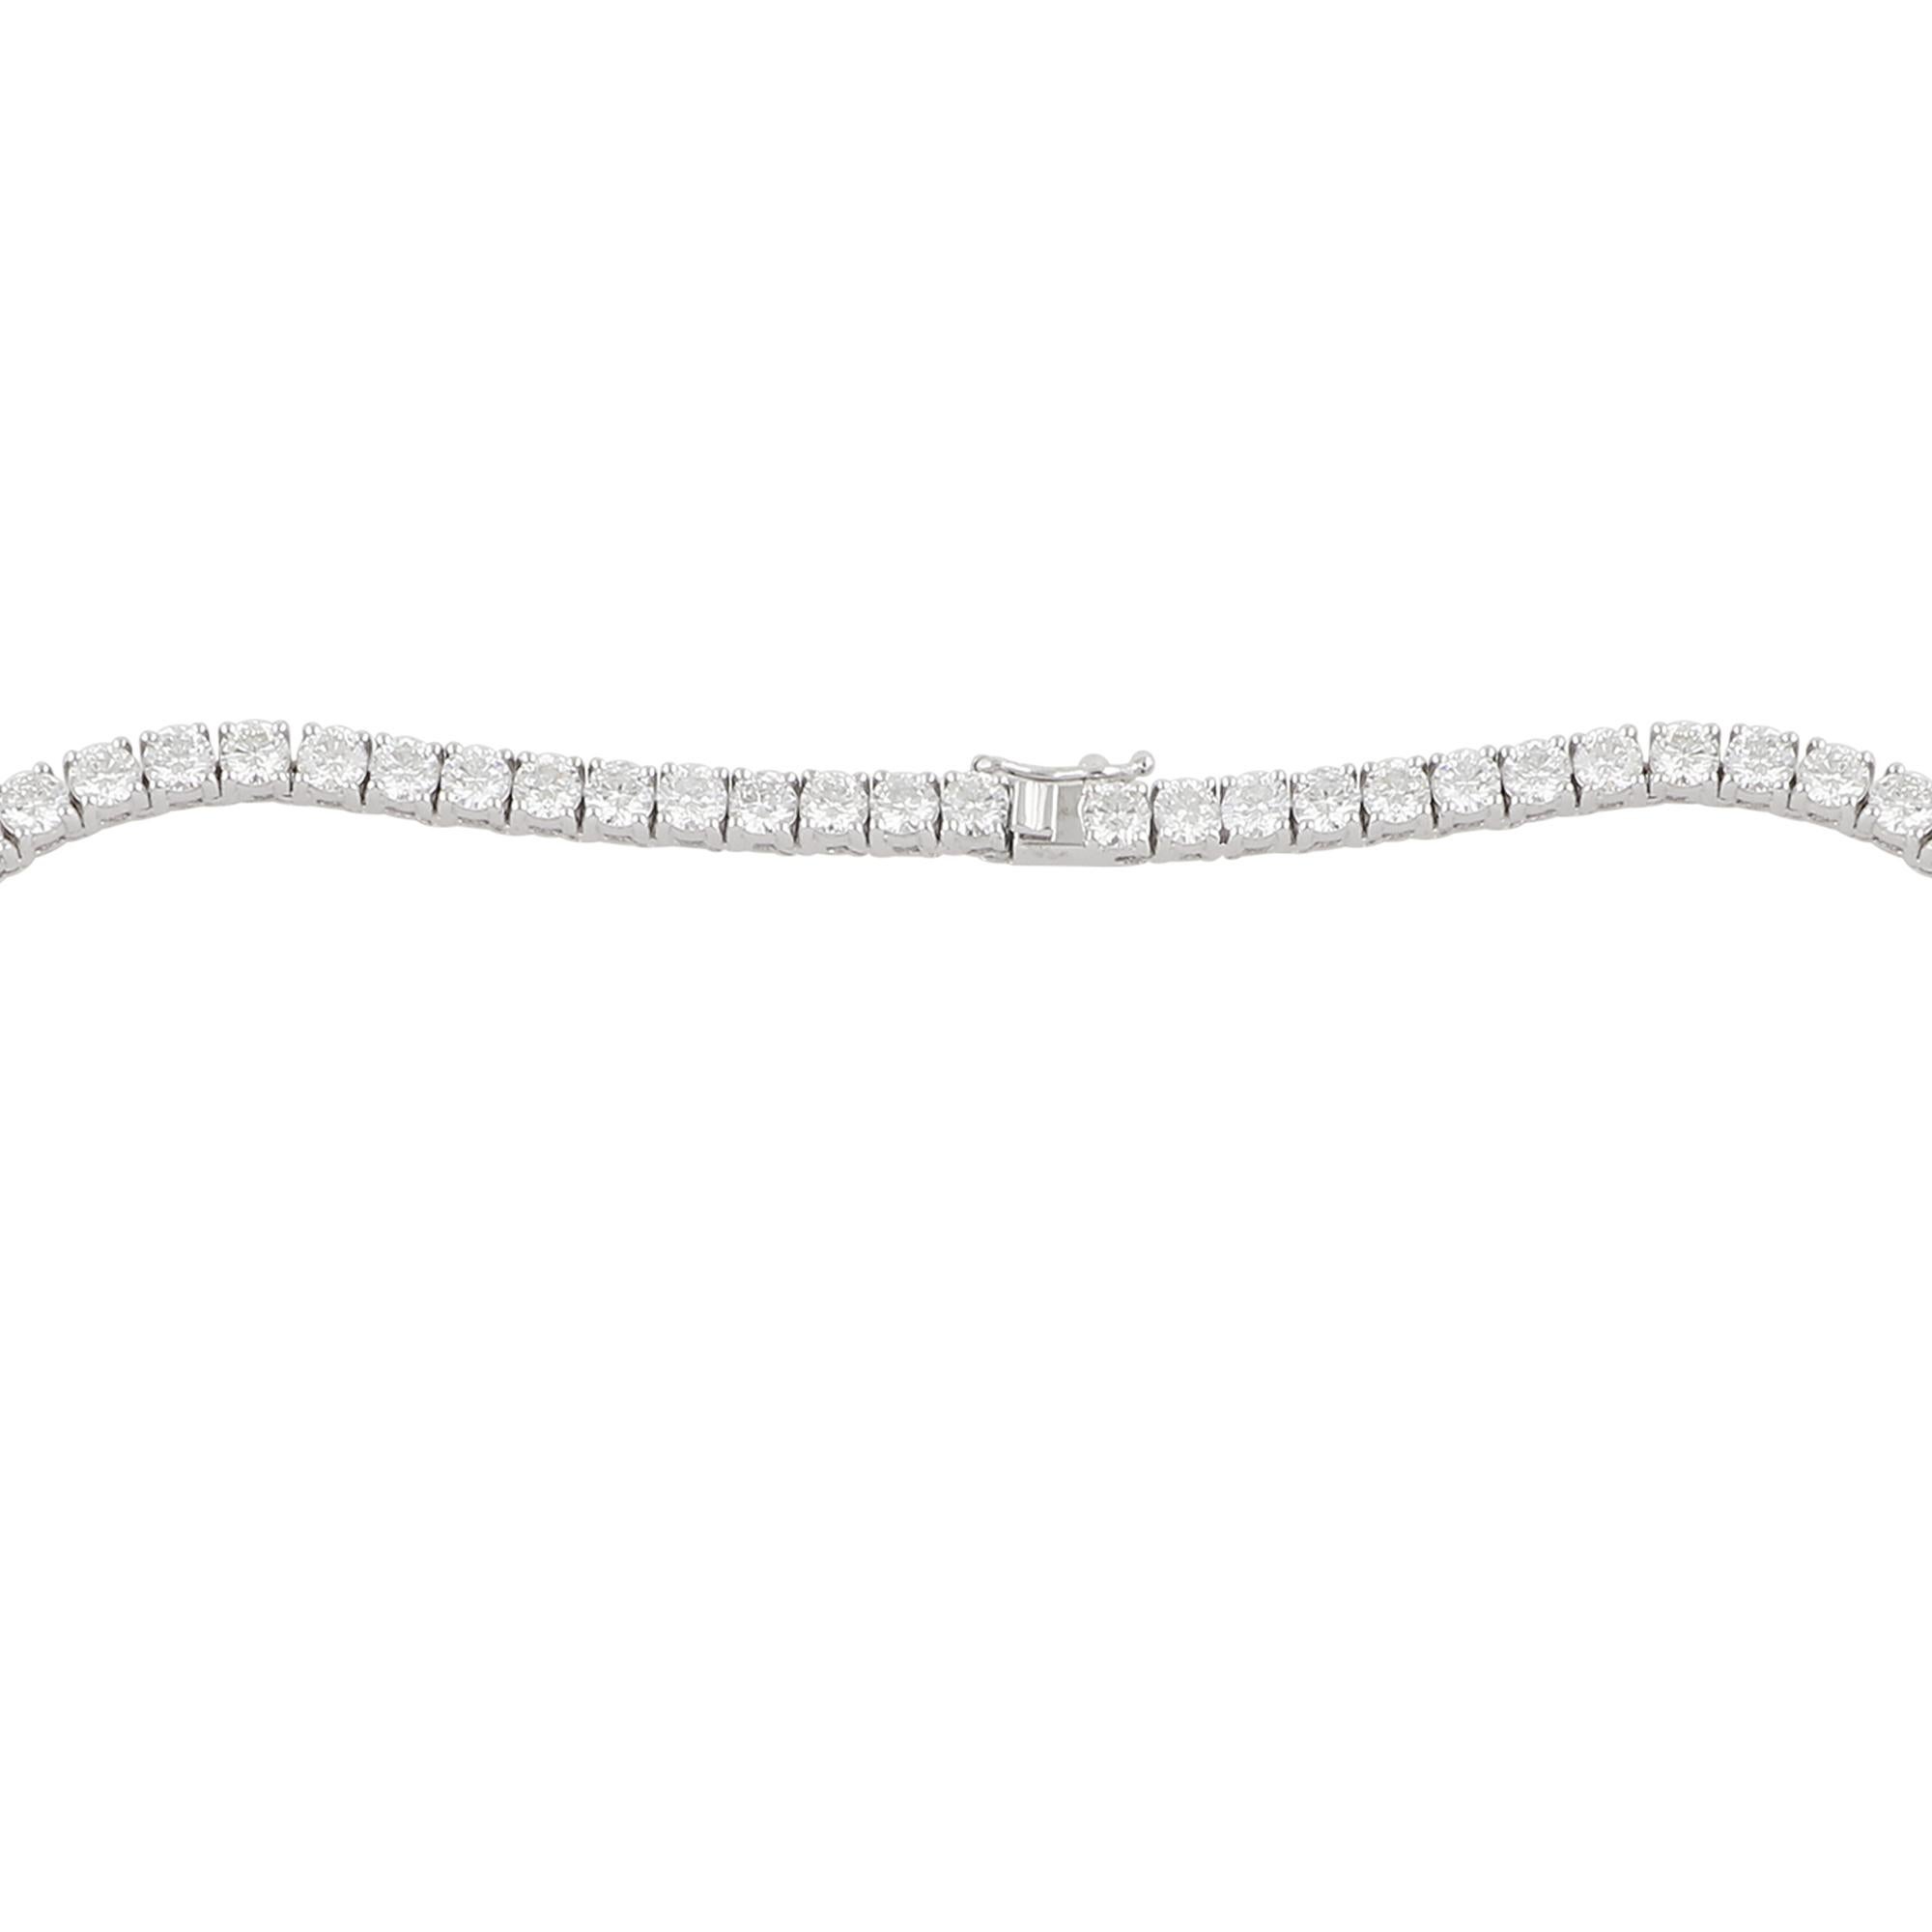 26.10 Carat Diamond Tennis Chain Necklace 18 Karat White Gold Handmade Jewelry For Sale 1